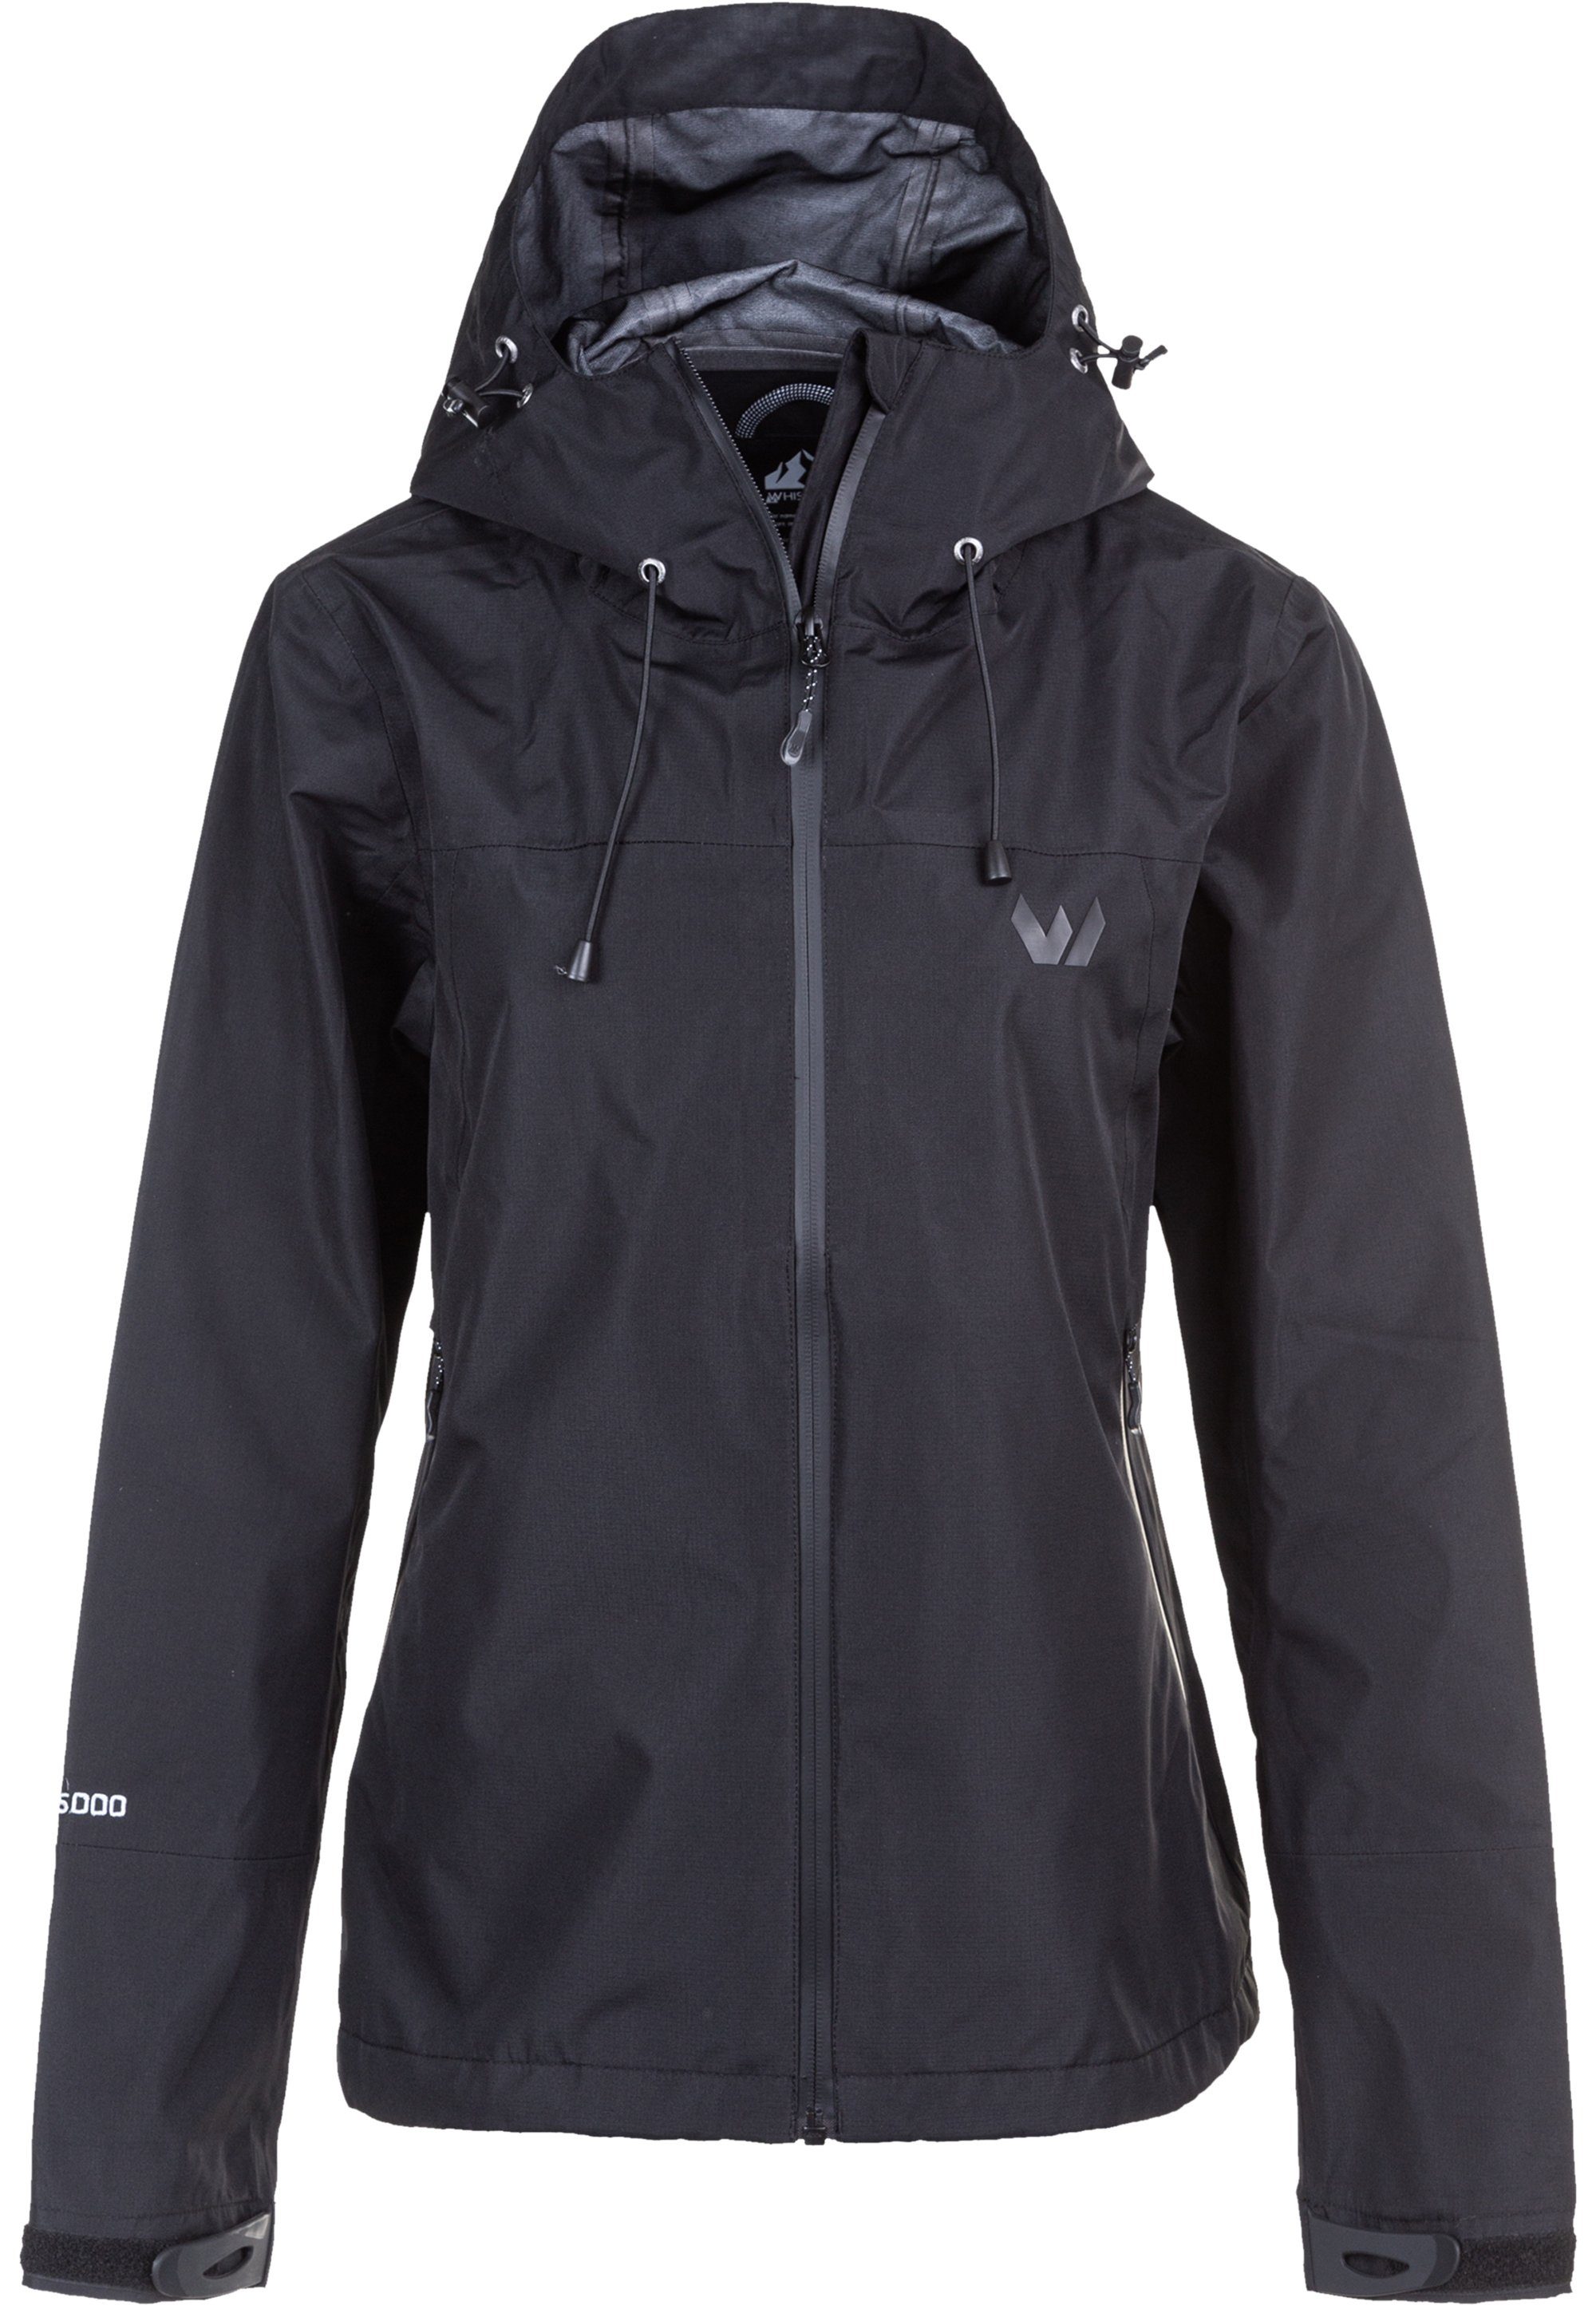 Jacket praktischer WHISTLER Shell 15000 schwarz Kapuze W Softshelljacke BROOK W-PRO mit